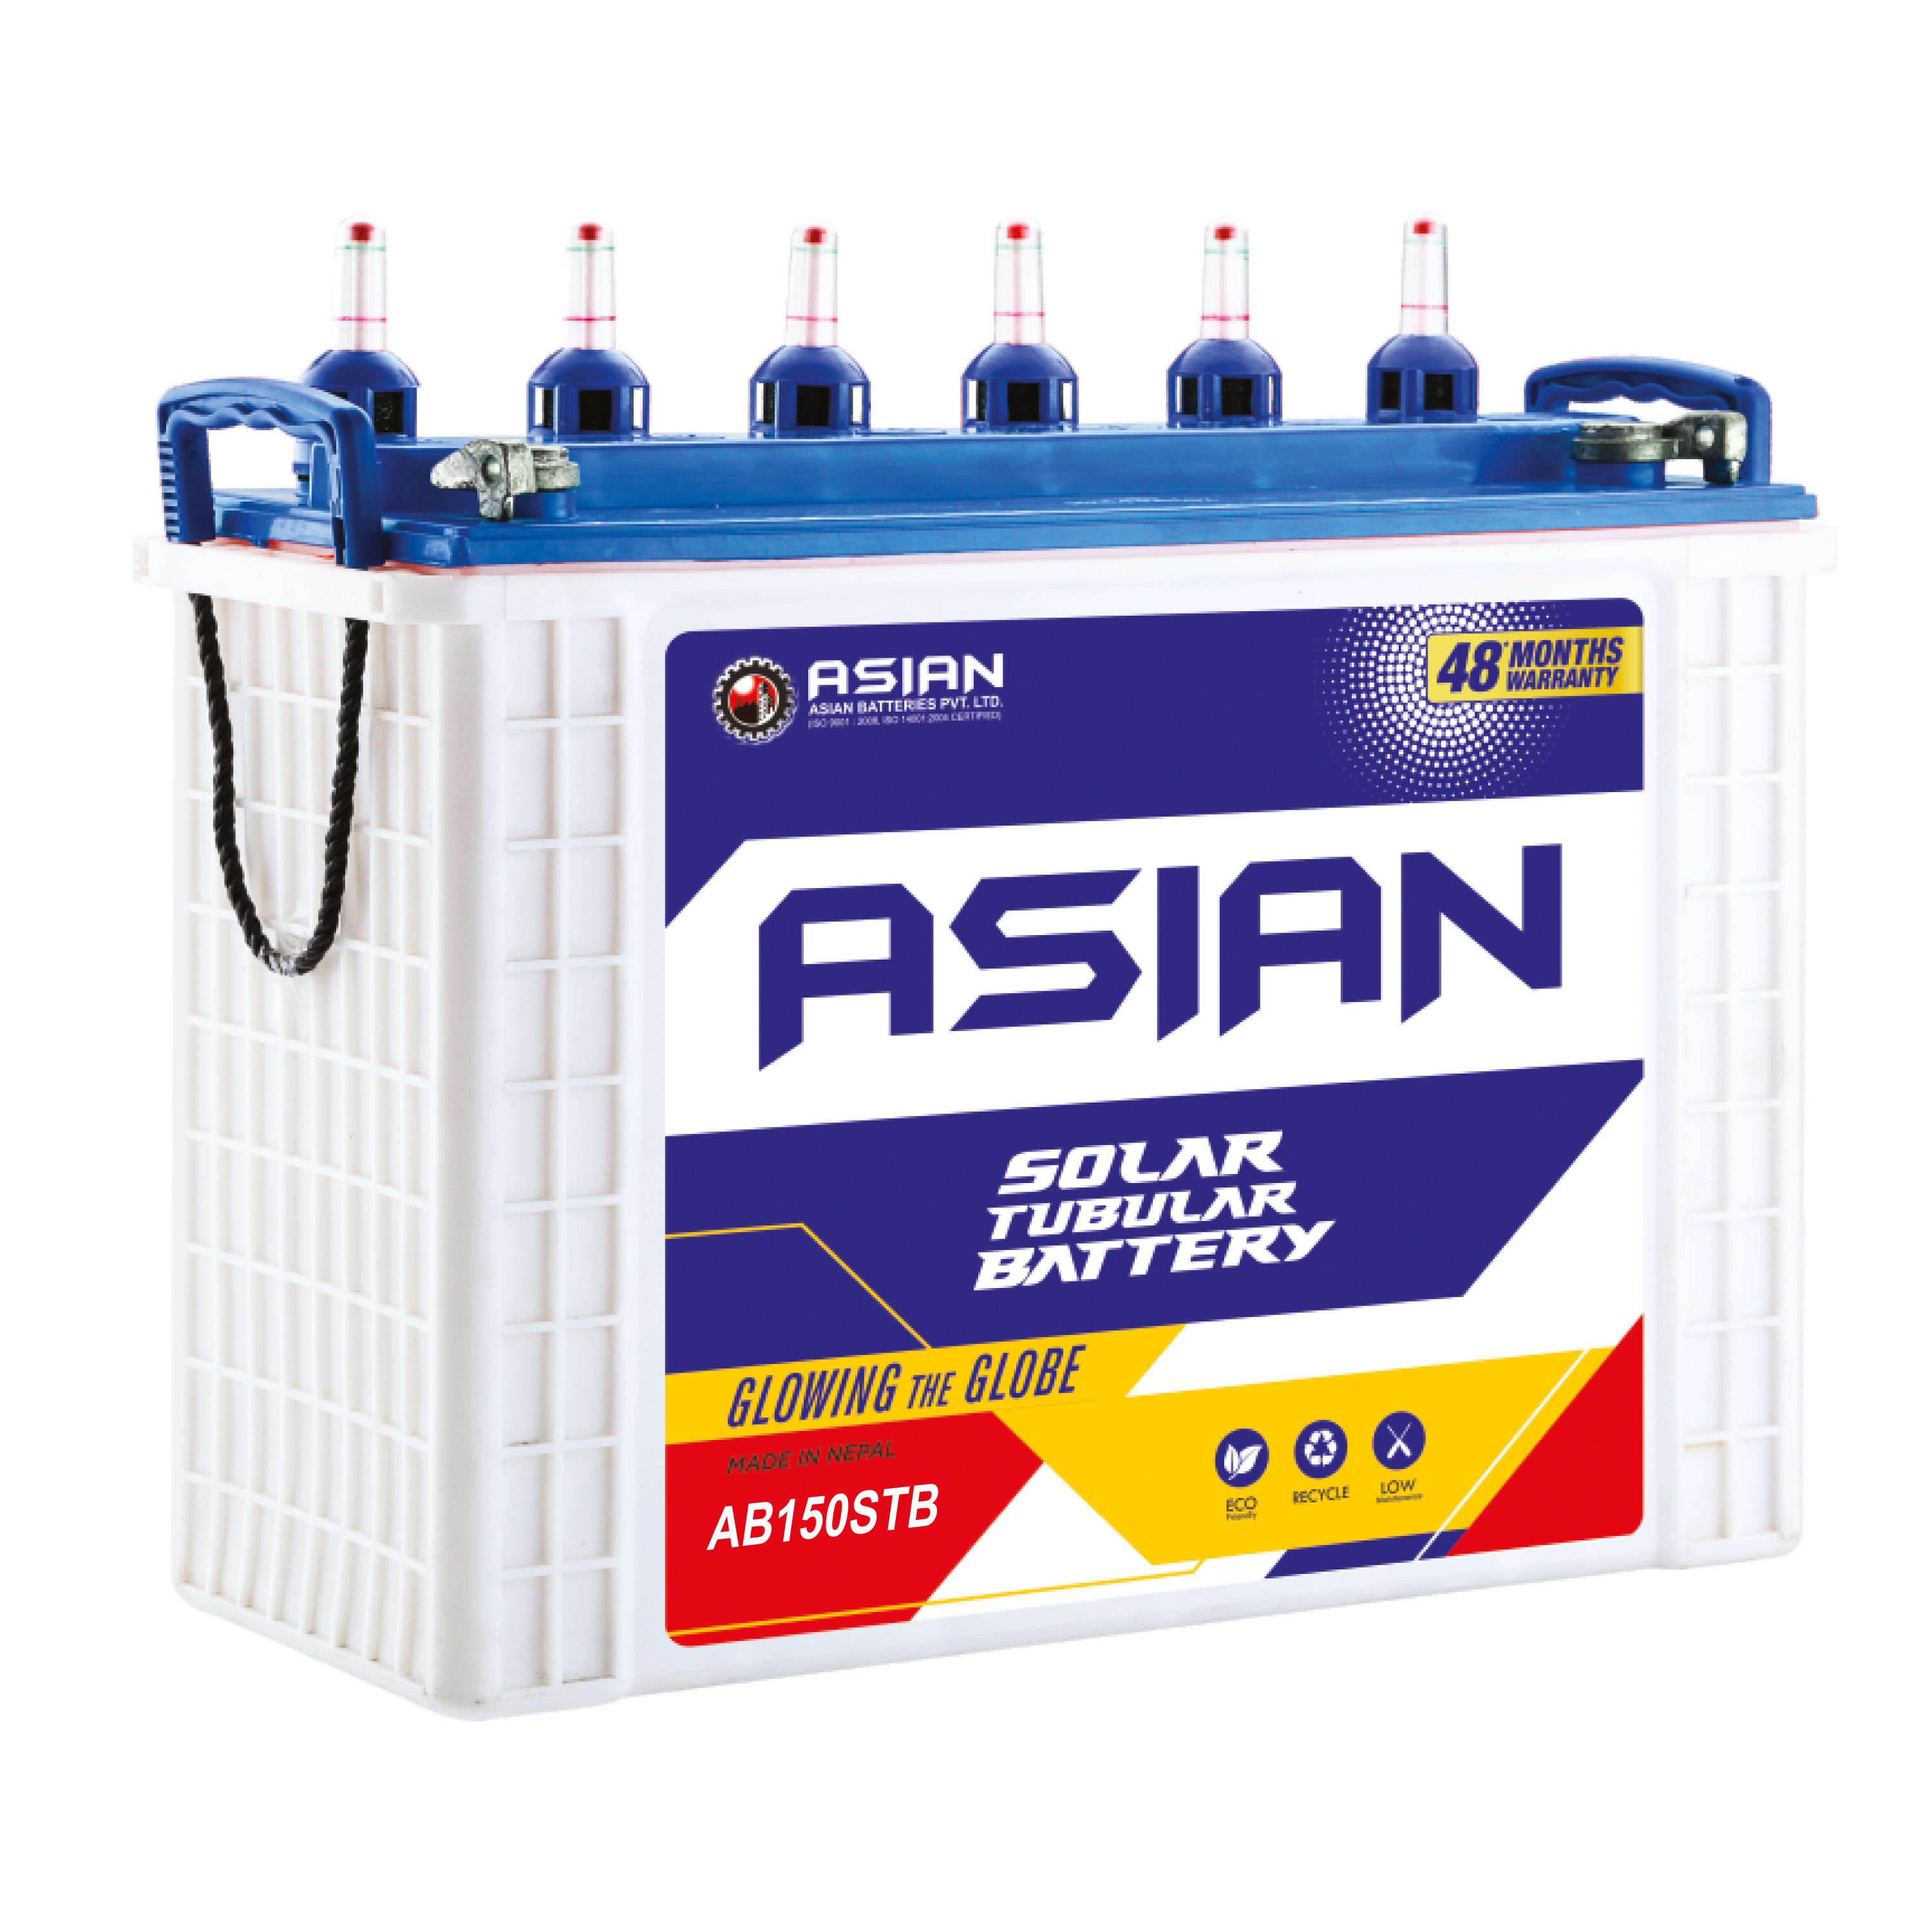 Asian Battery, Solar Tubular Batteries